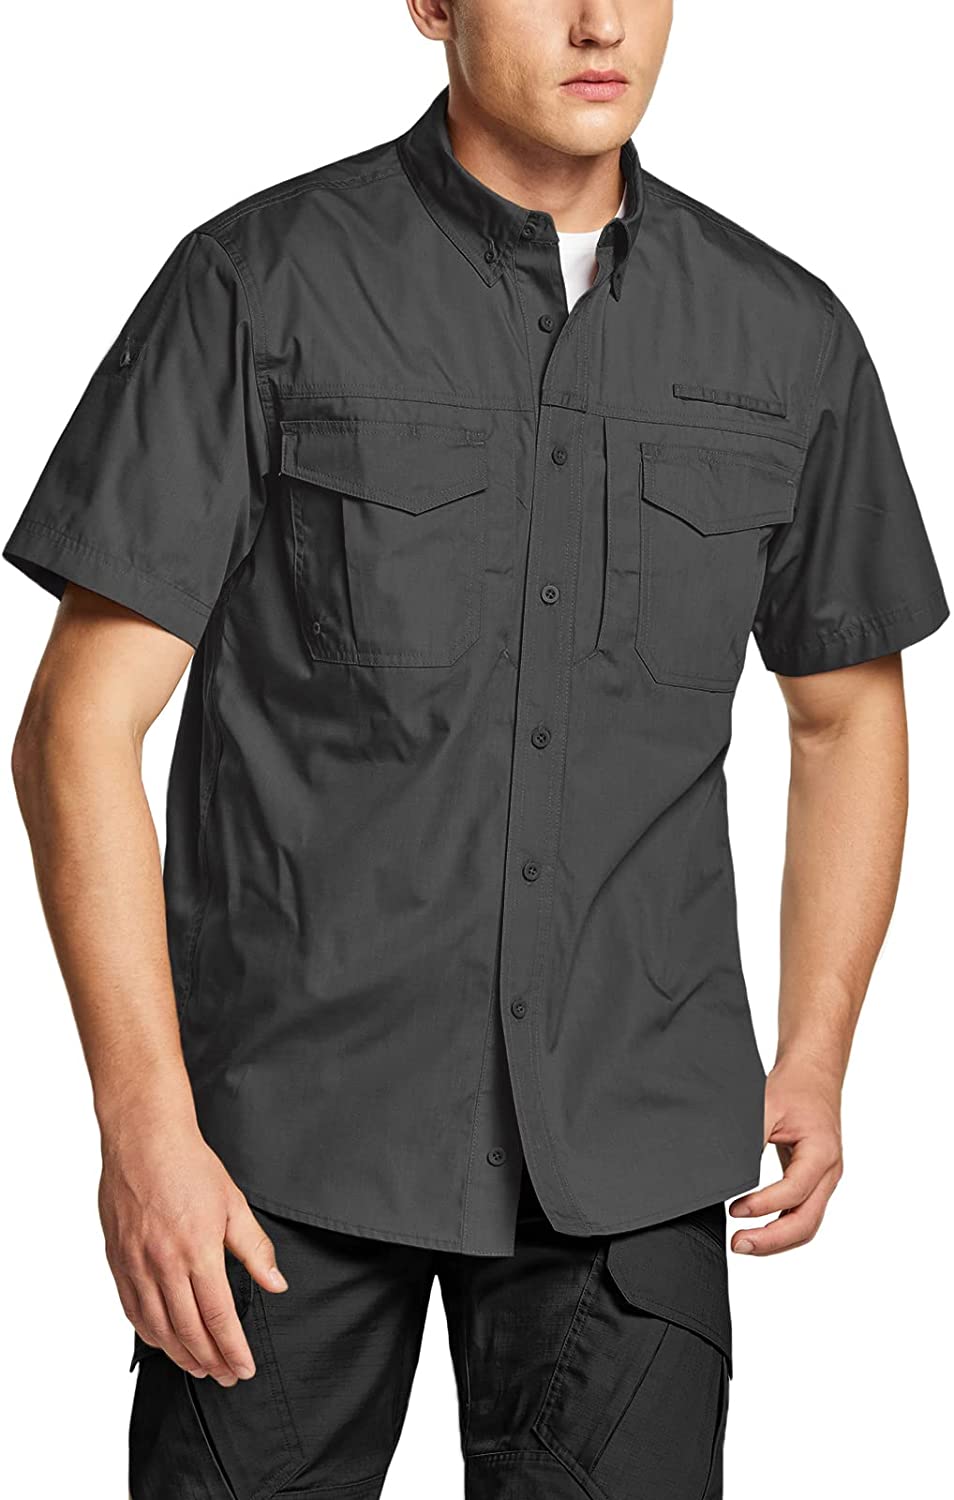 Breathable Hiking Shirt Outdoor UPF 50 Ripstop Military Tactical Shirts CQR Men's Short Sleeve Work Shirts 